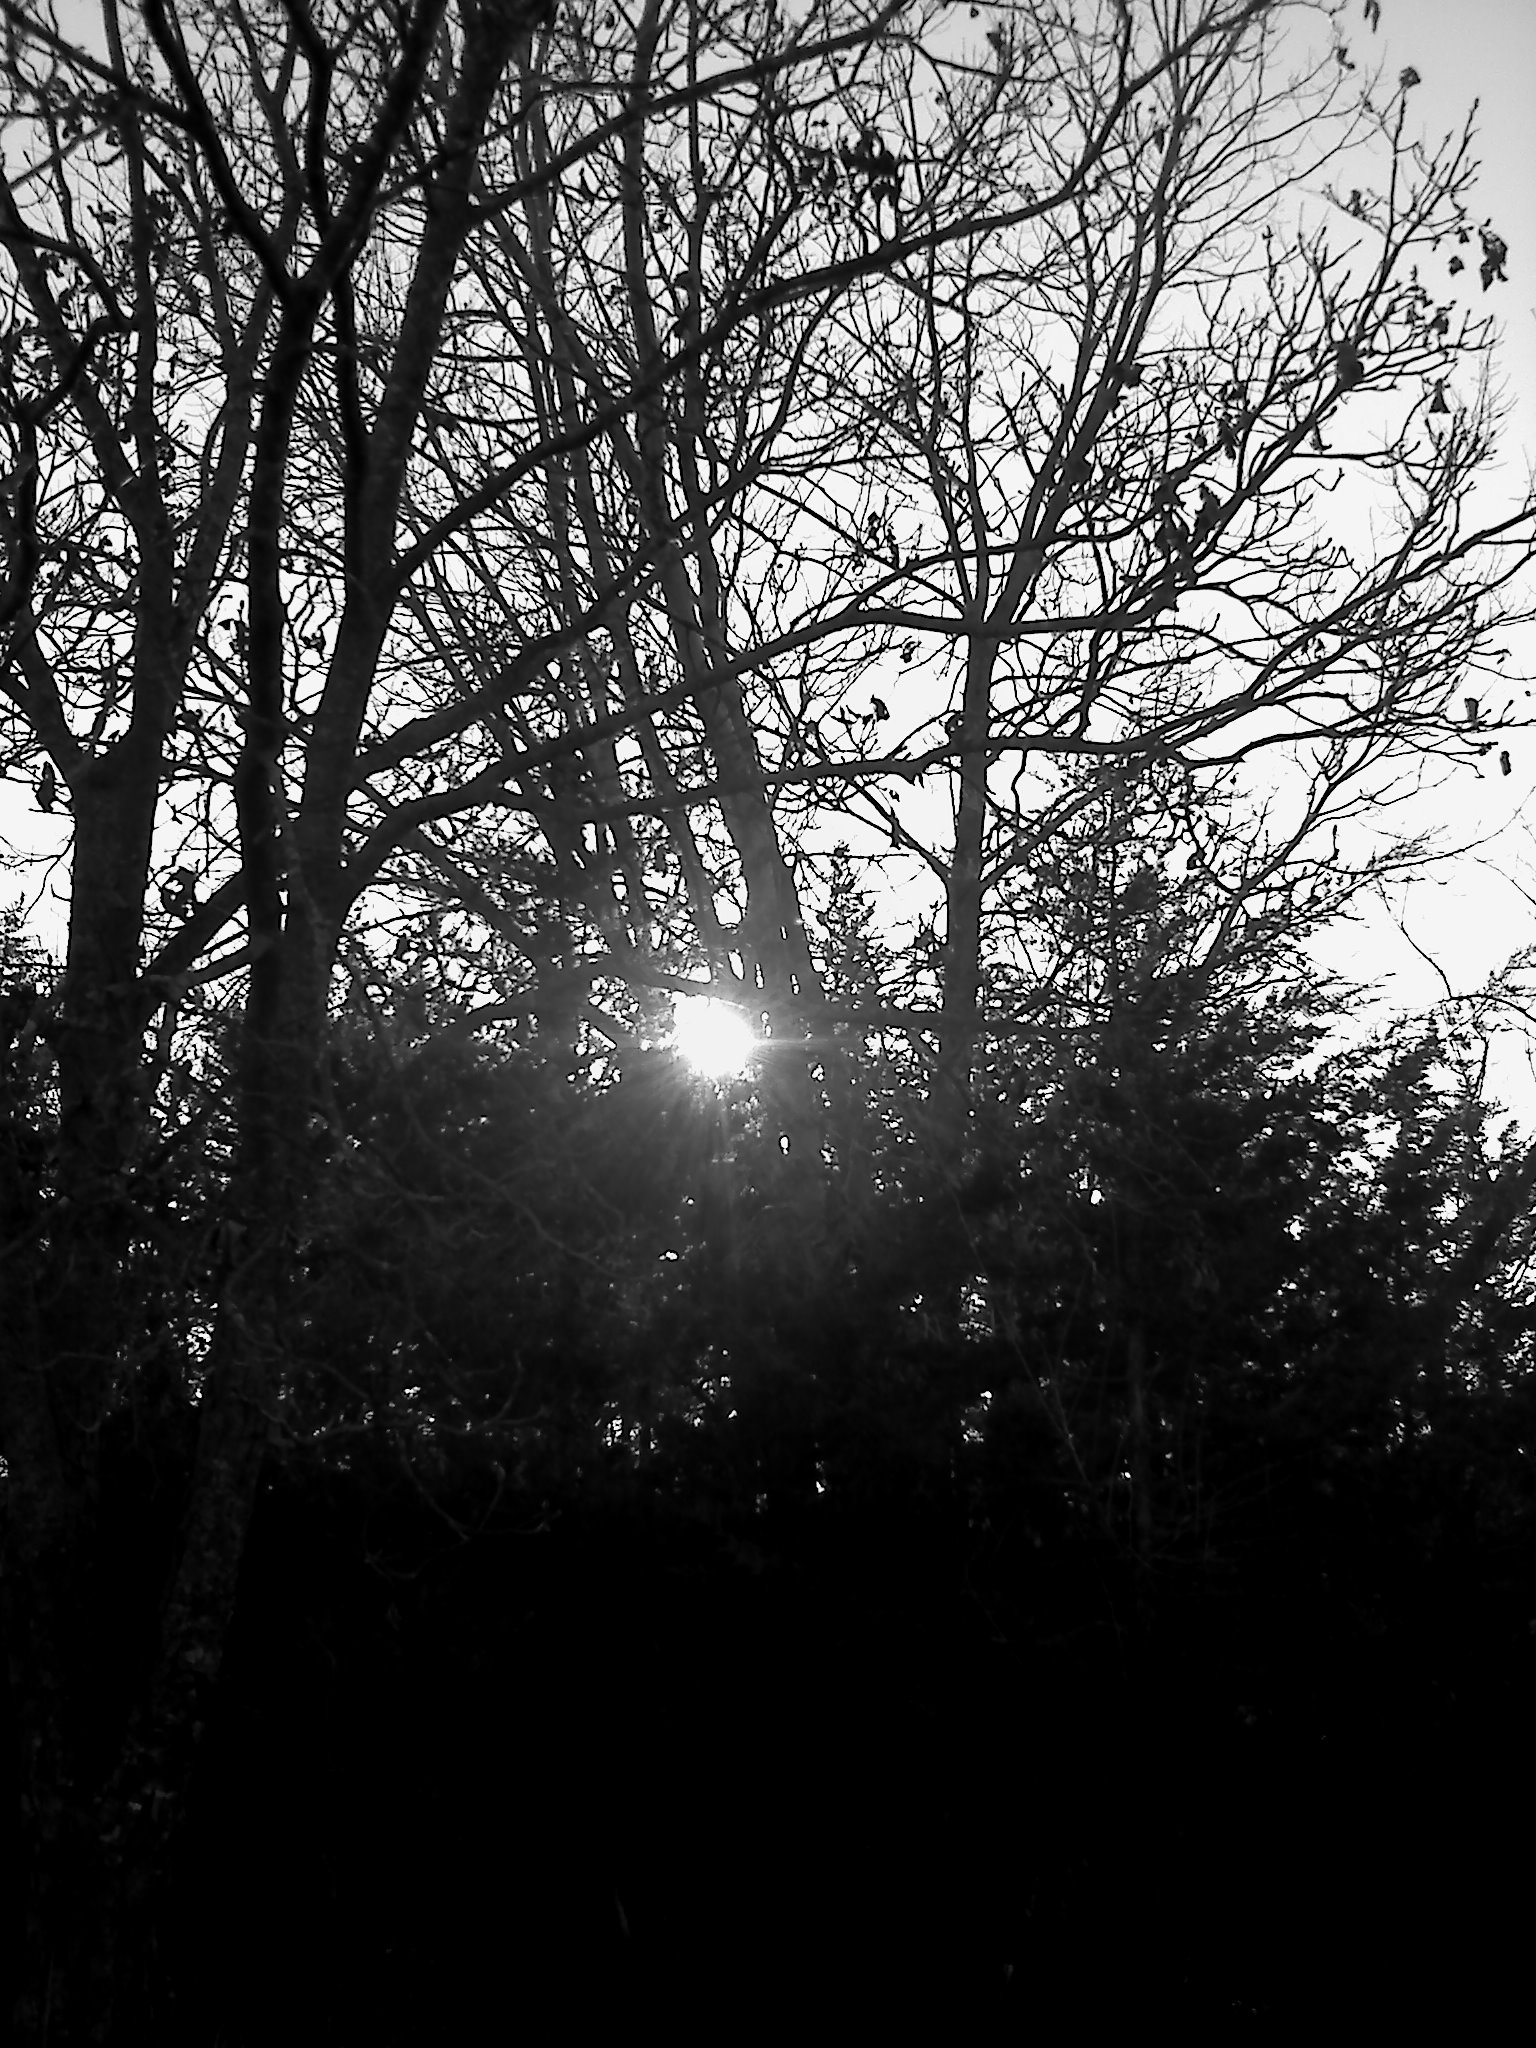 the sun peeking through some trees in the distance